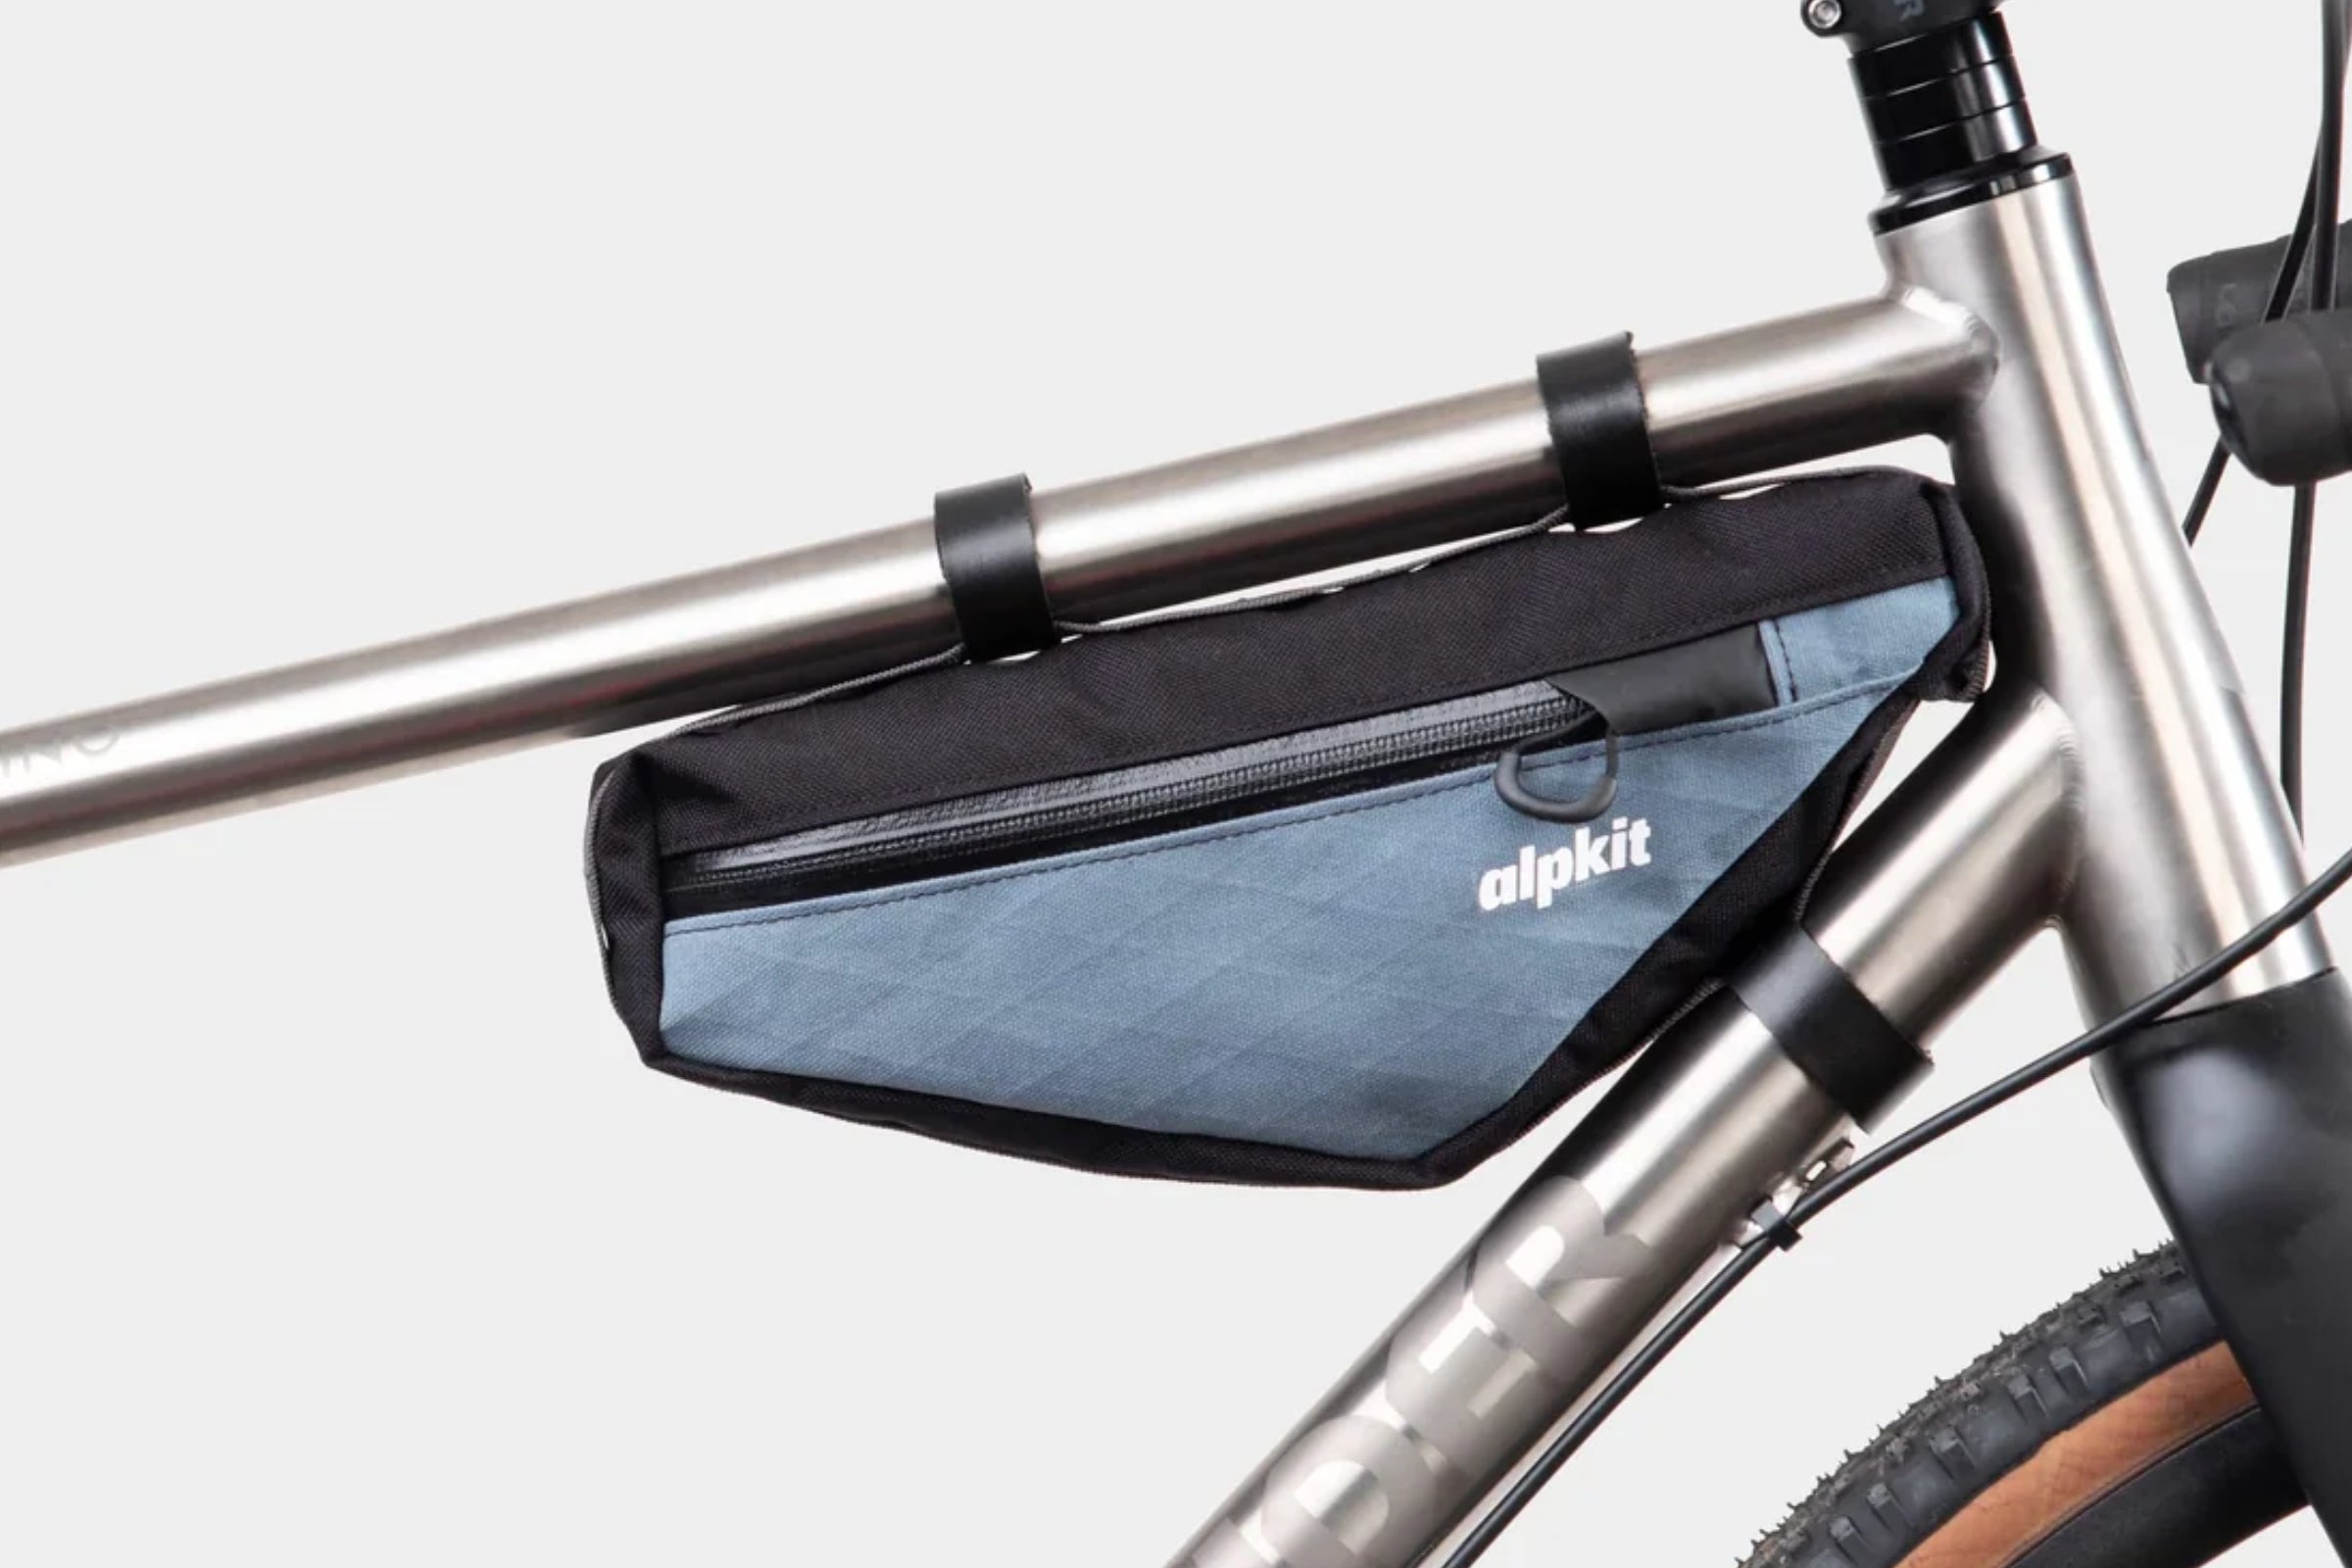 Guy Kesteven Reviews the Alpkit Bilbie: A Compact Essential for Bikepackers